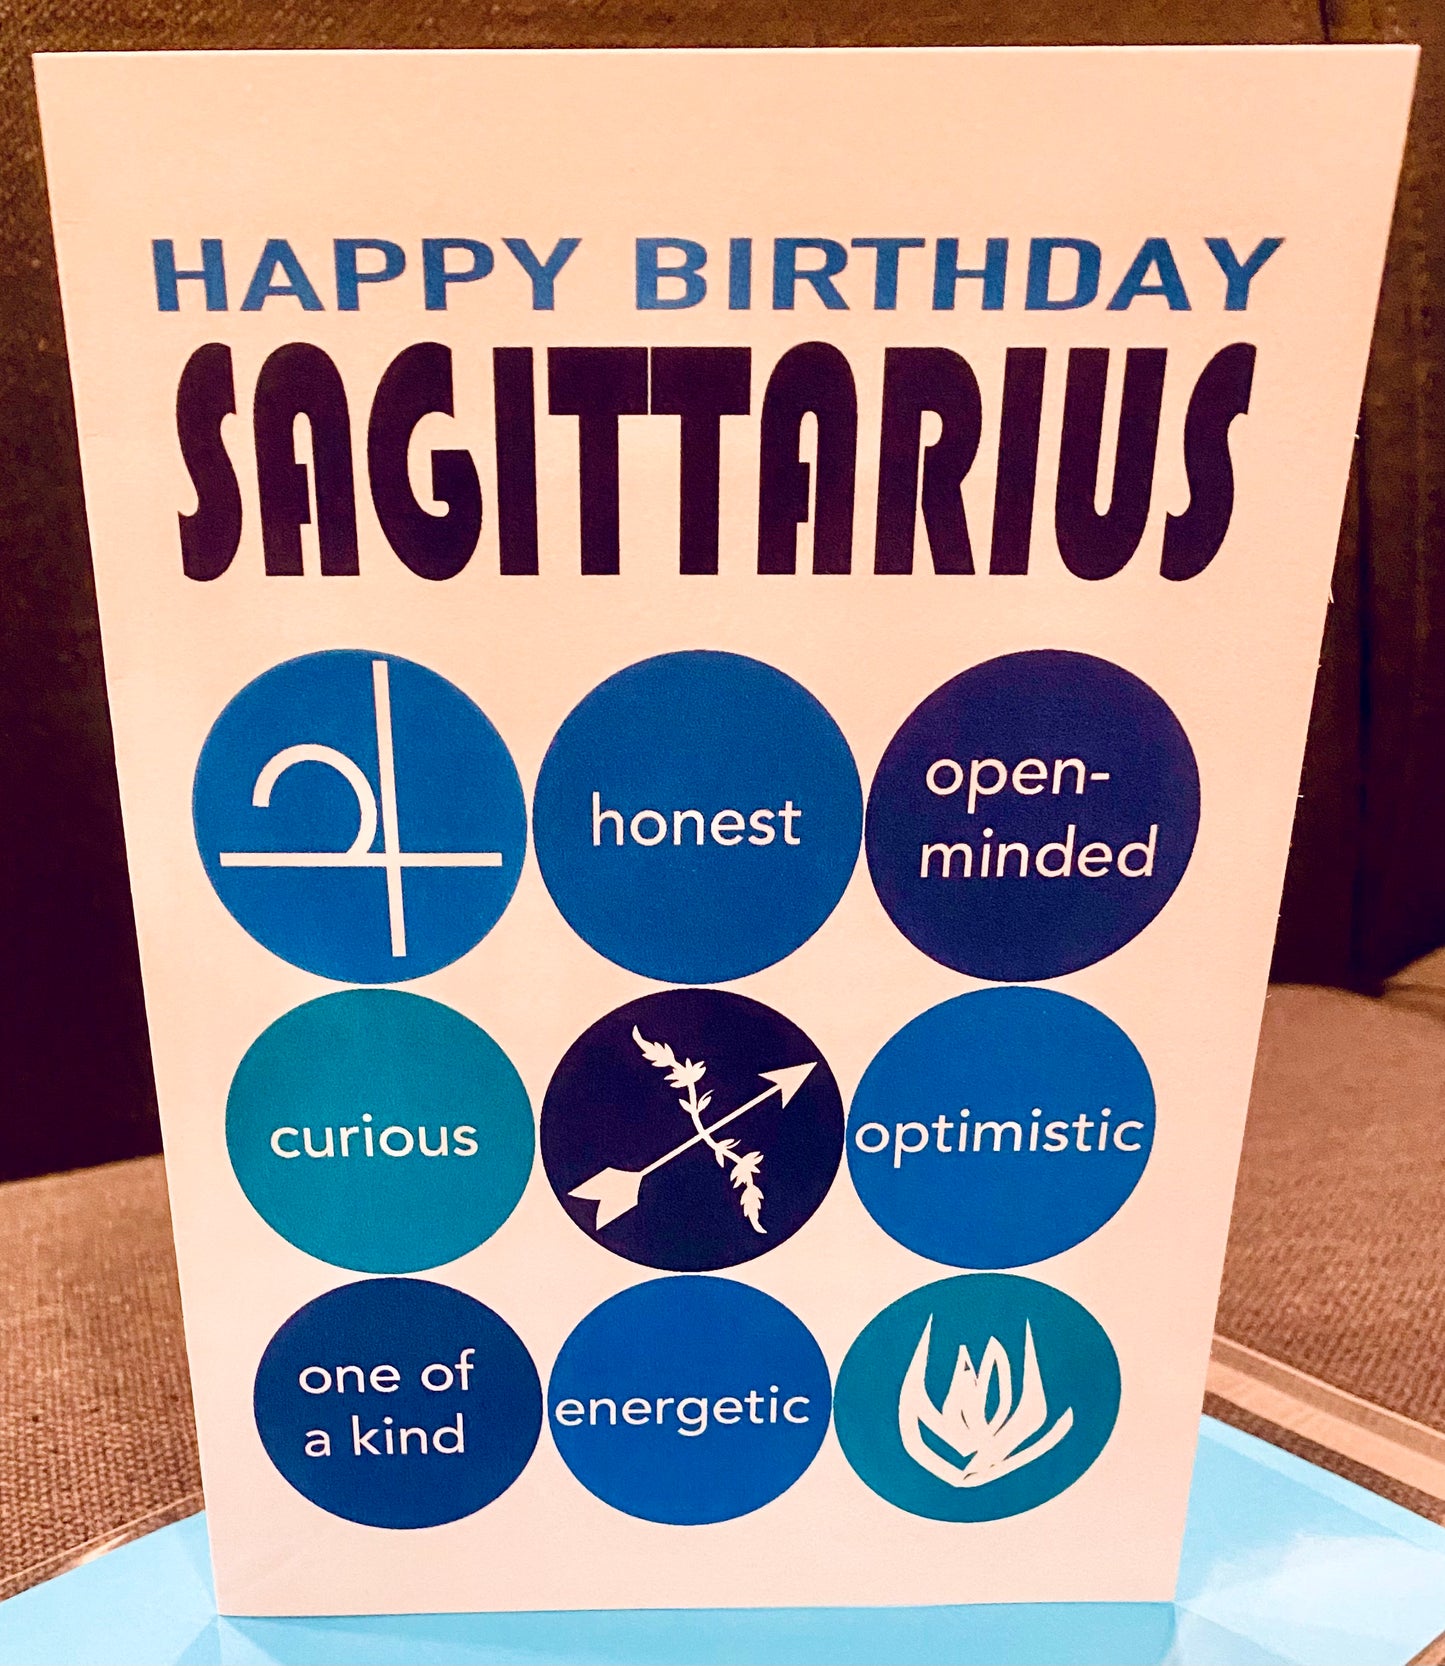 SAGITTARIUS HAPPY BIRTHDAY Astrology Greeting Card